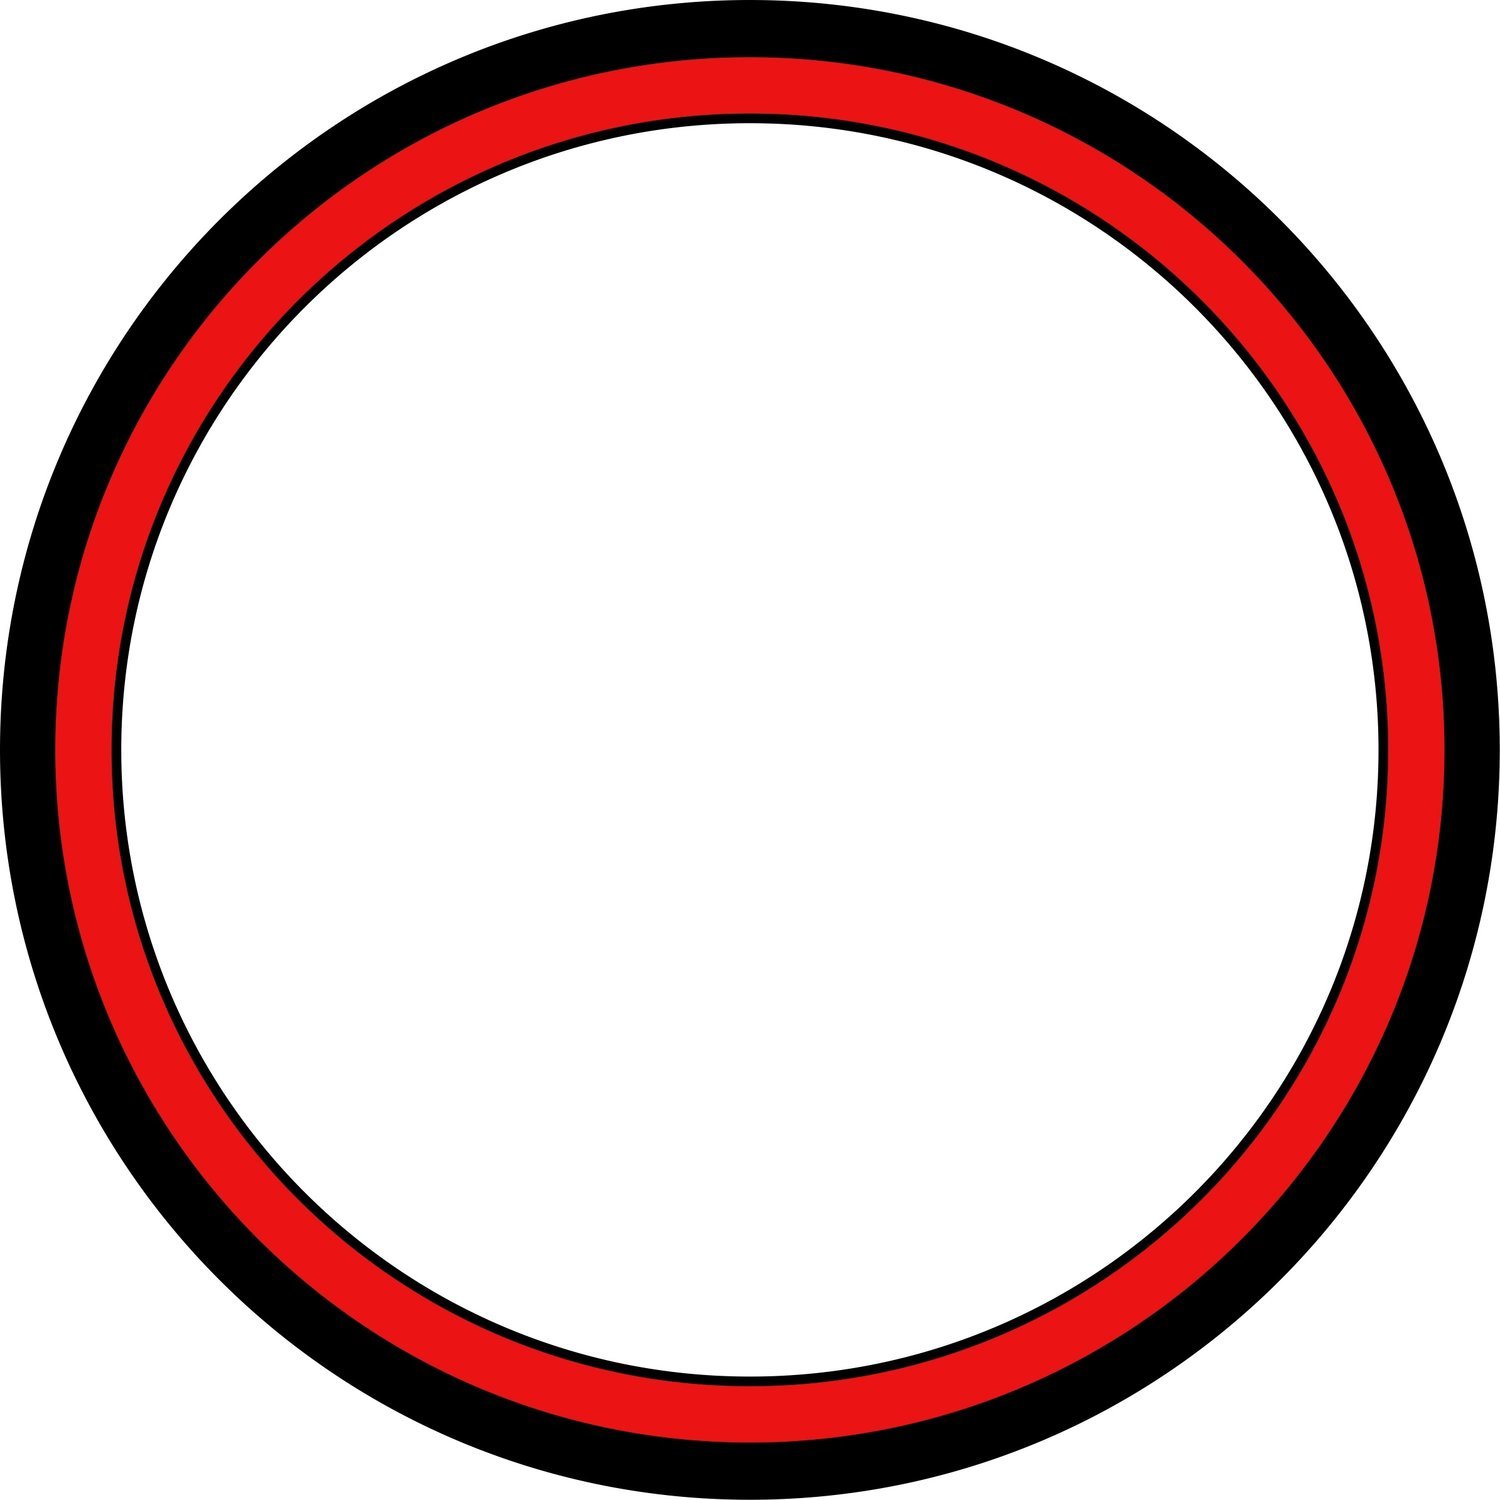 Circular Red